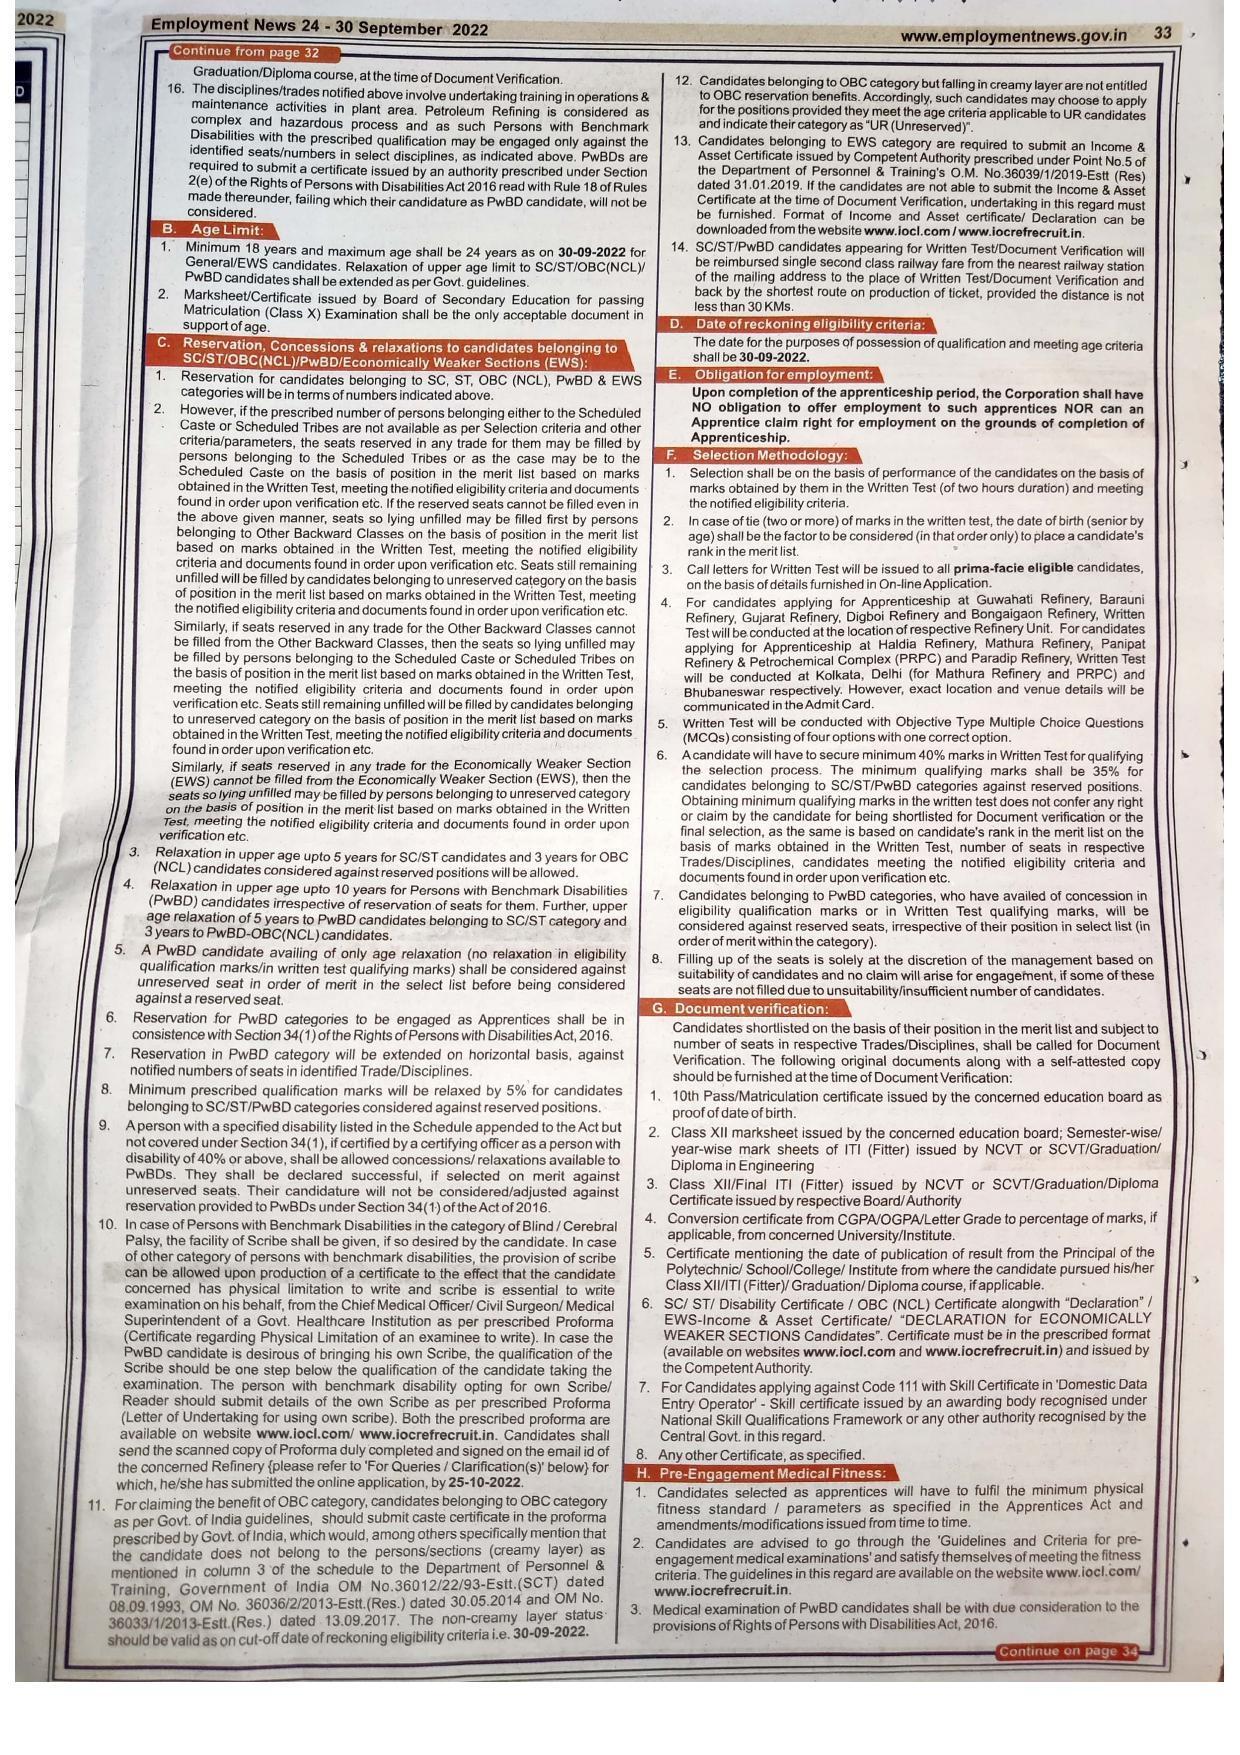 Indian Oil Corporation (IOCL) Apprentice Recruitment 2022 - Page 2